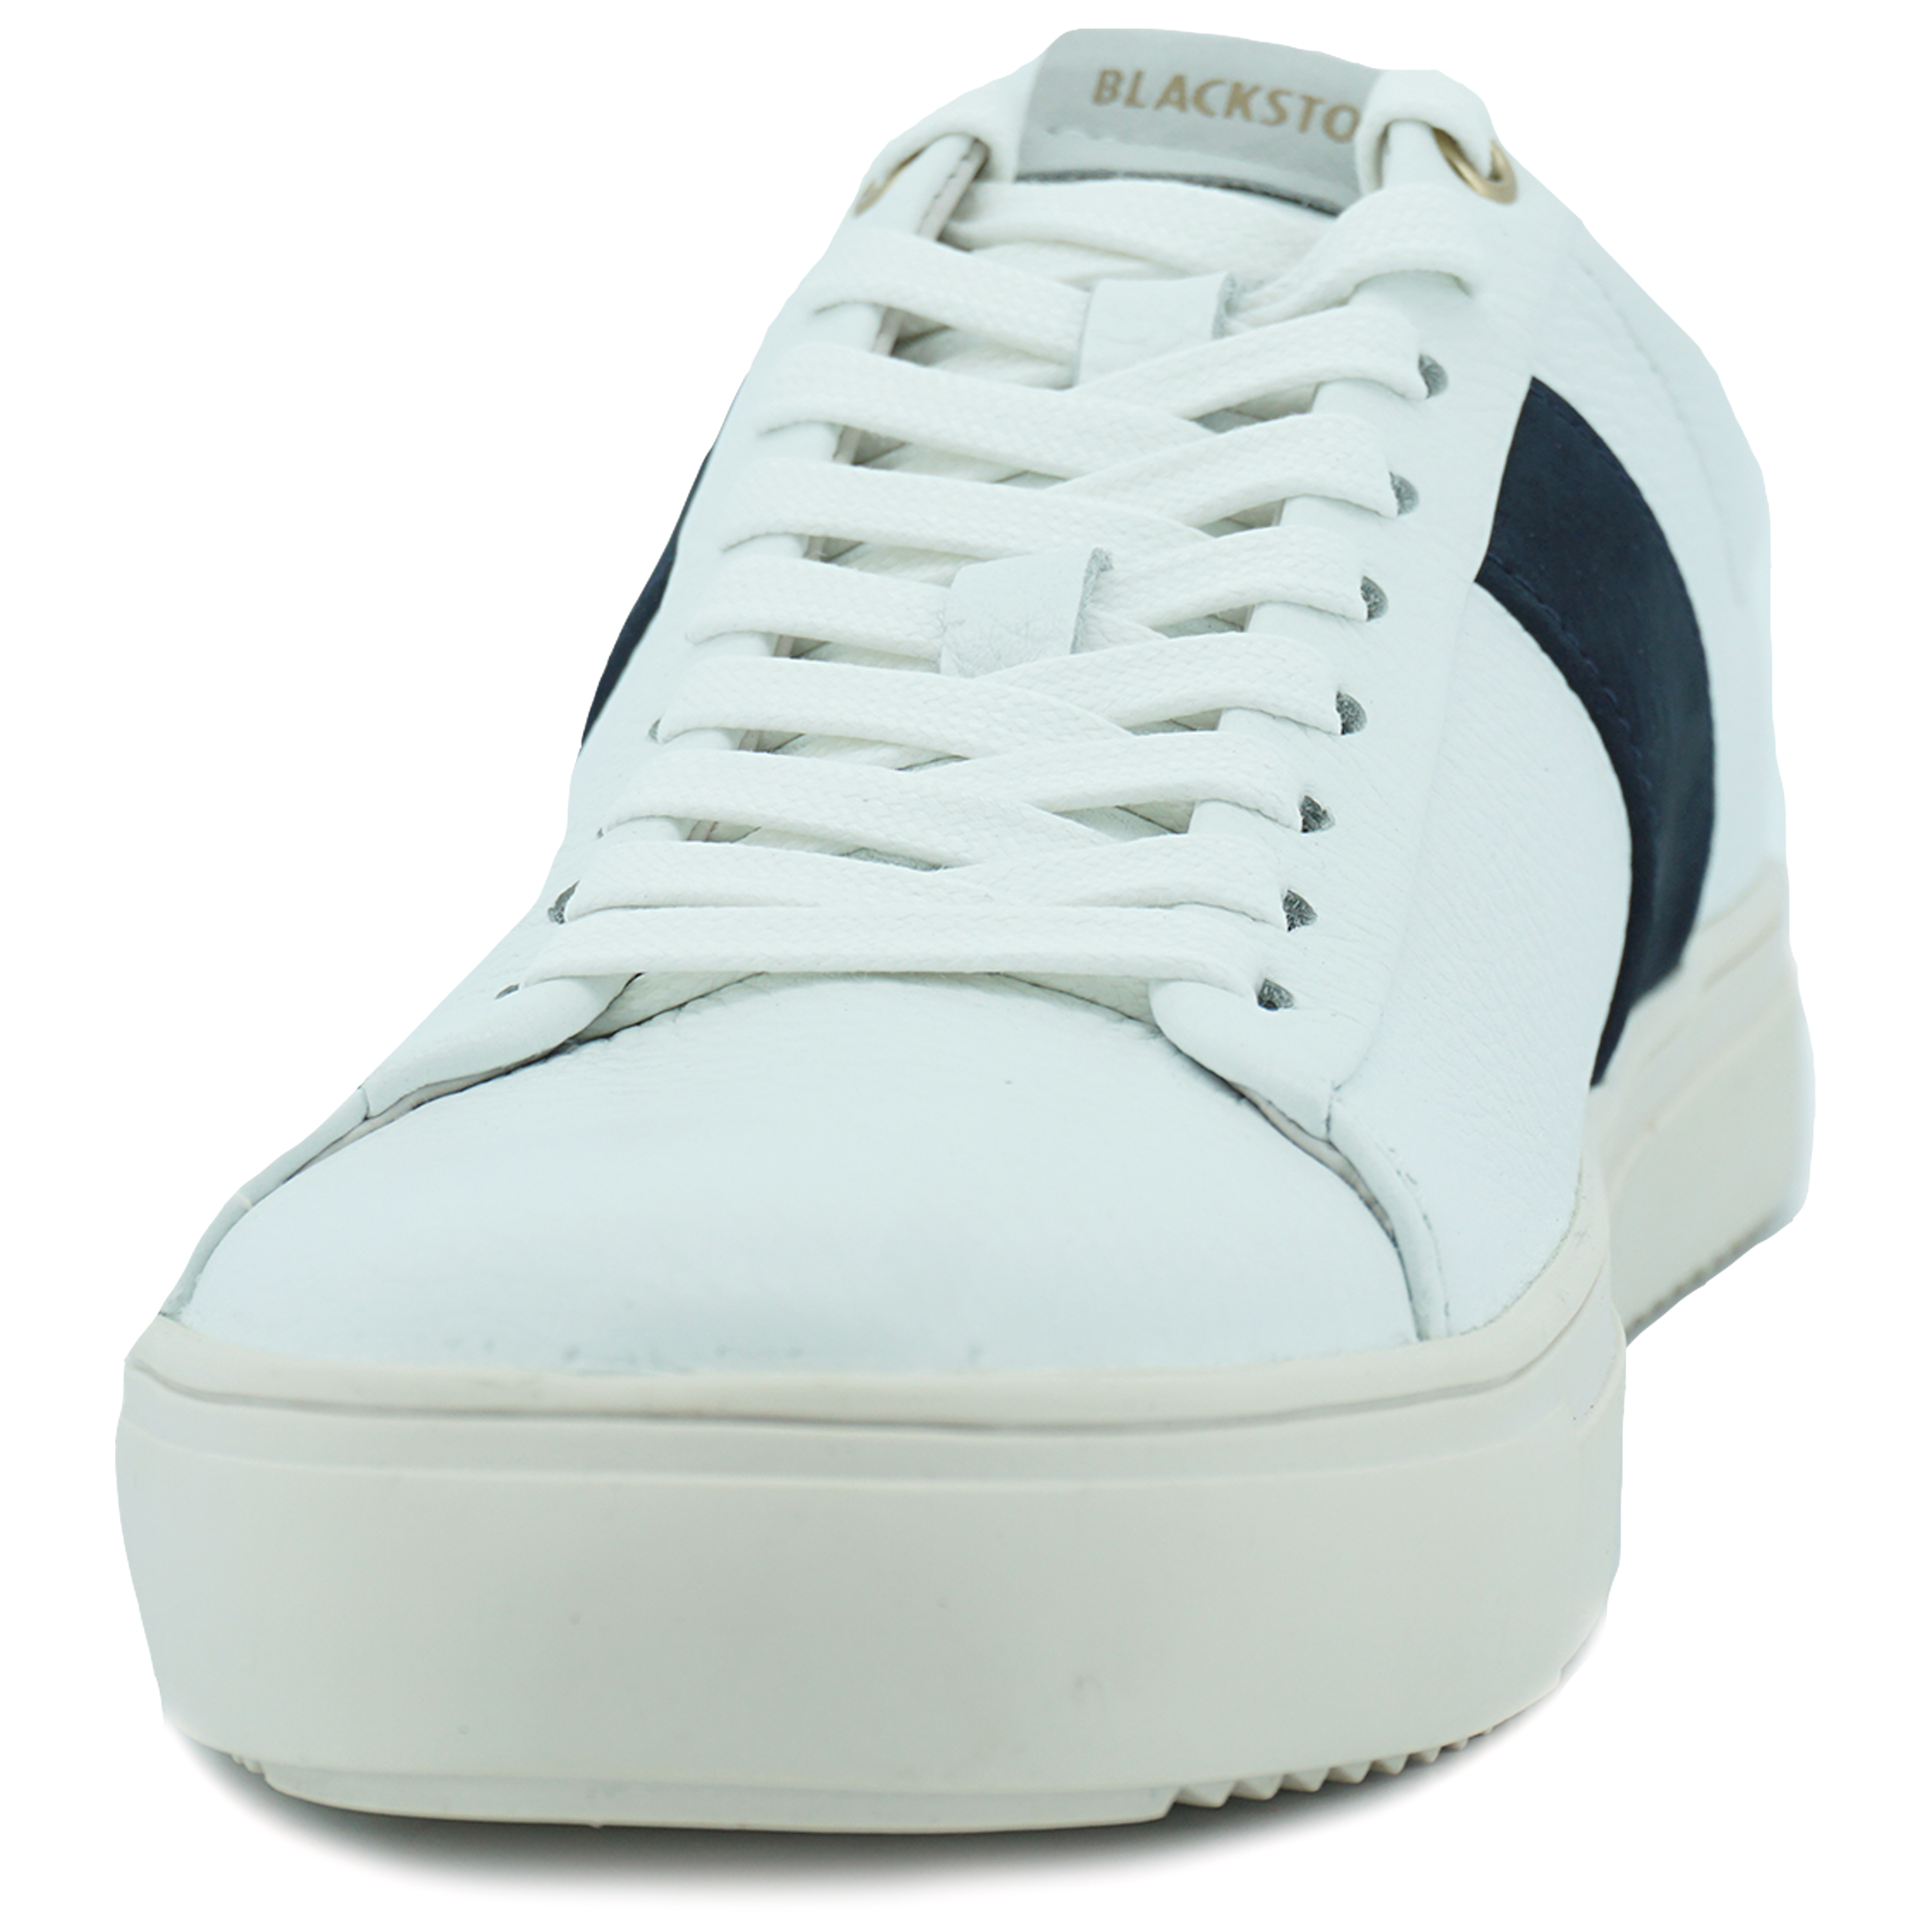 Blackstone Sneaker VG09 navy white